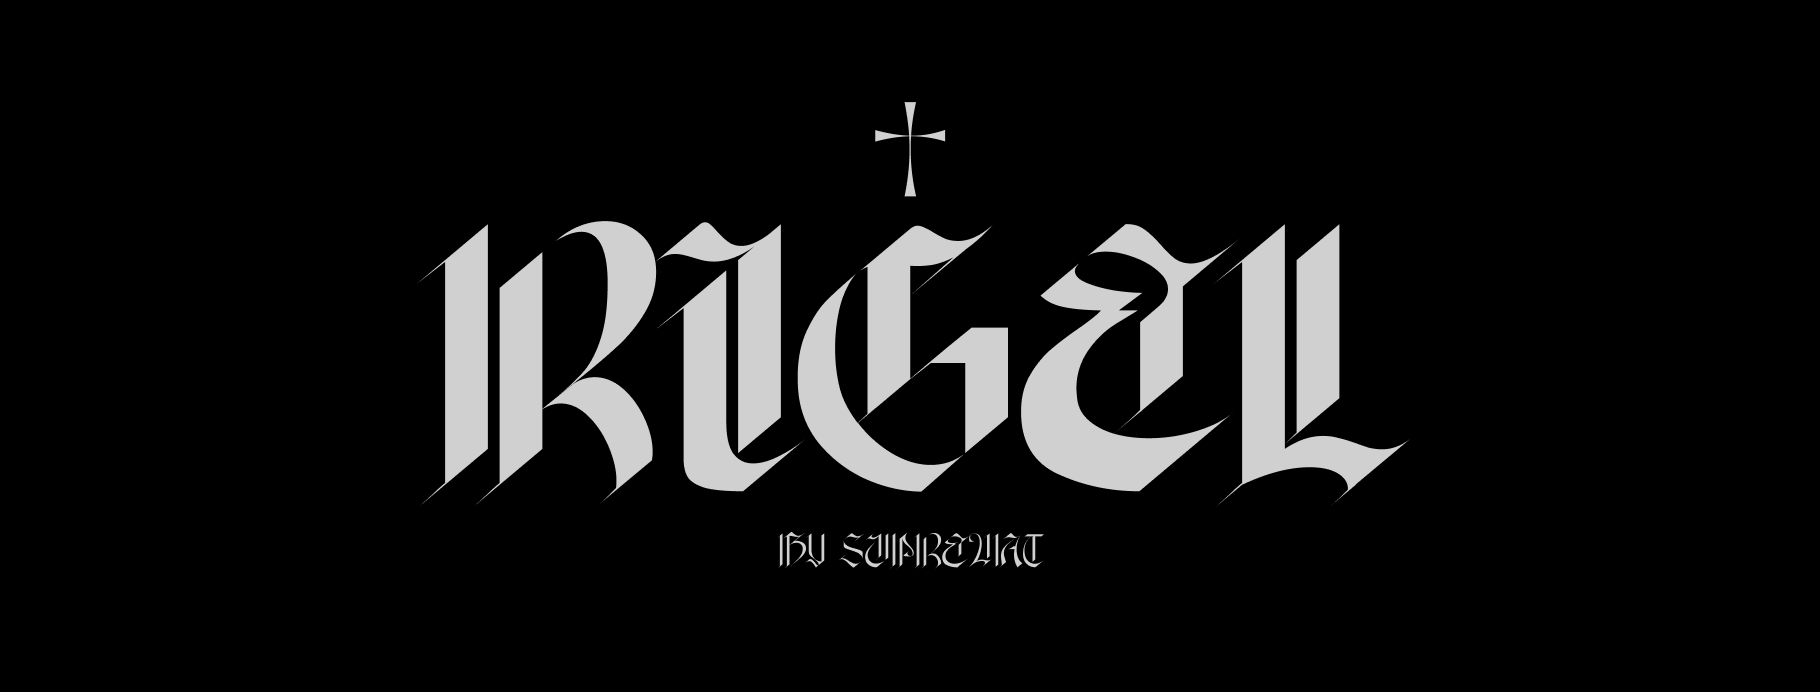 Rigel Typeface